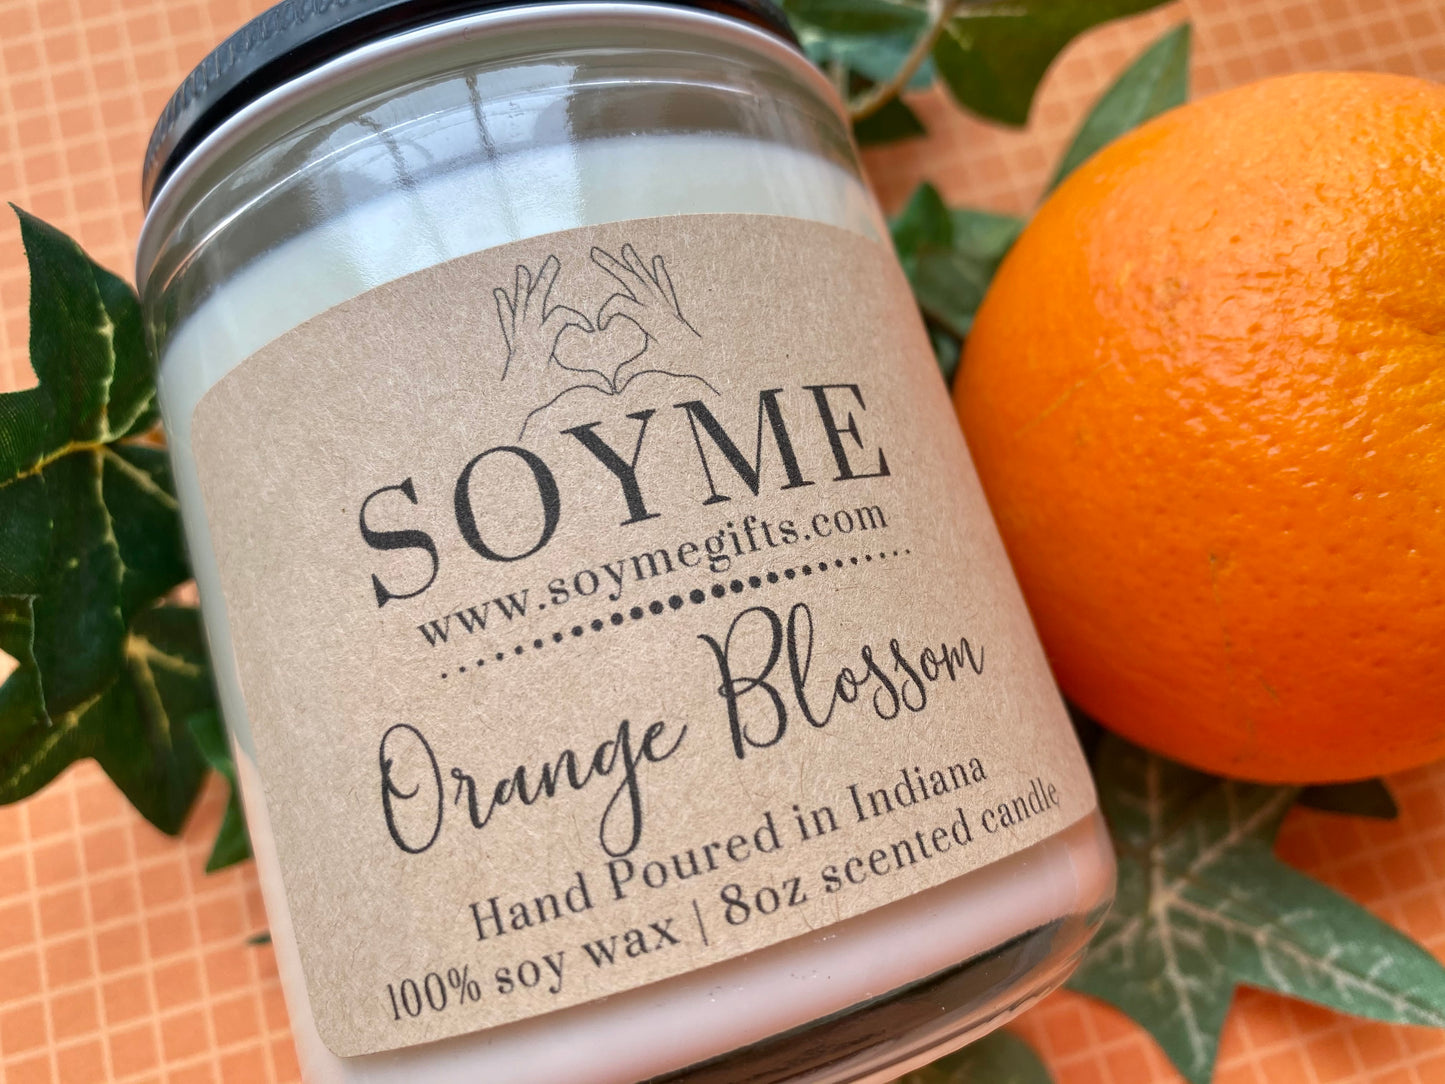 Orange Blossom - Soyme Gifts